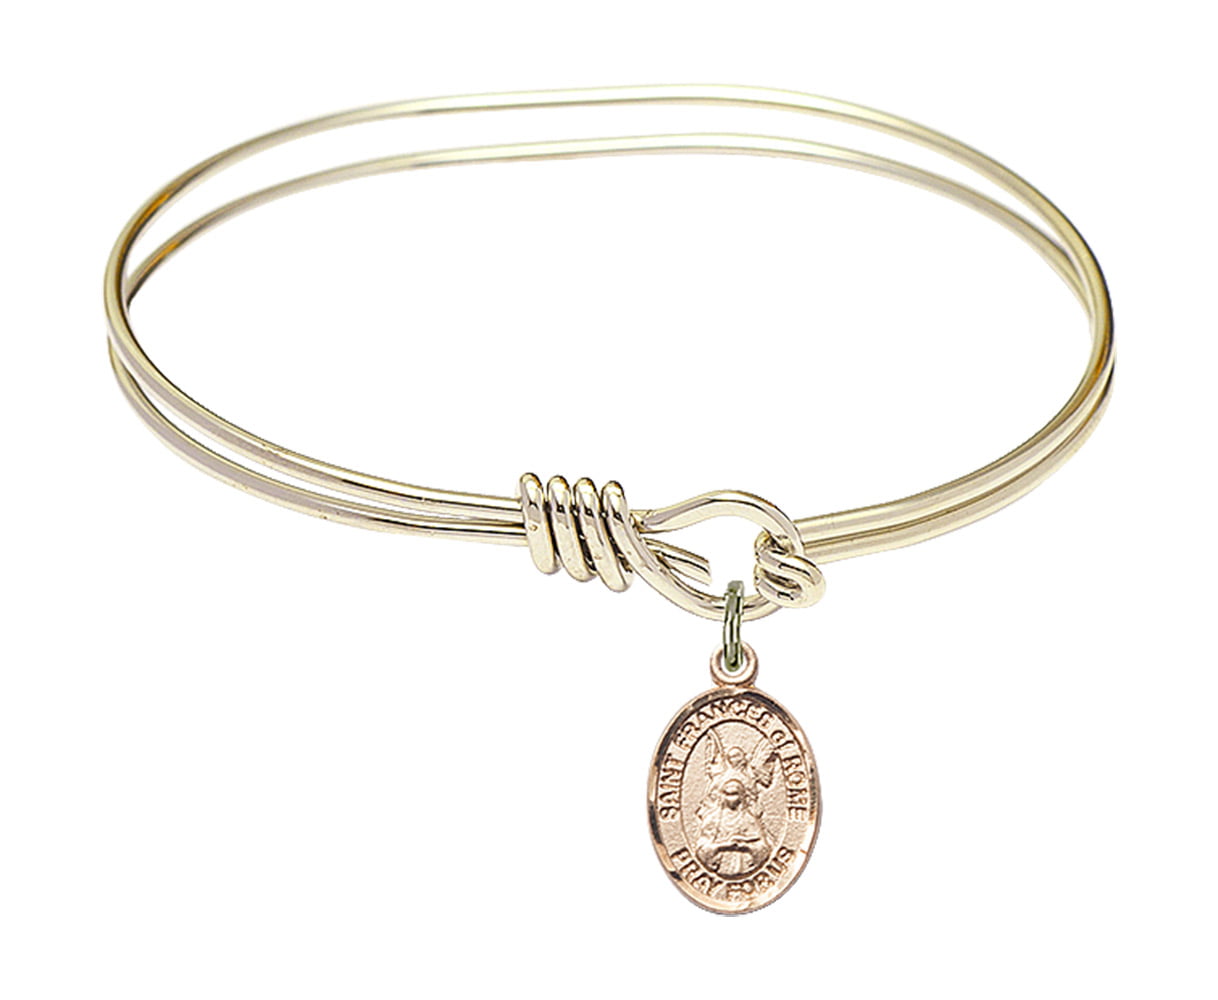 7 inch Oval Eye Hook Bangle Bracelet with a St Frances of Rome charm. 